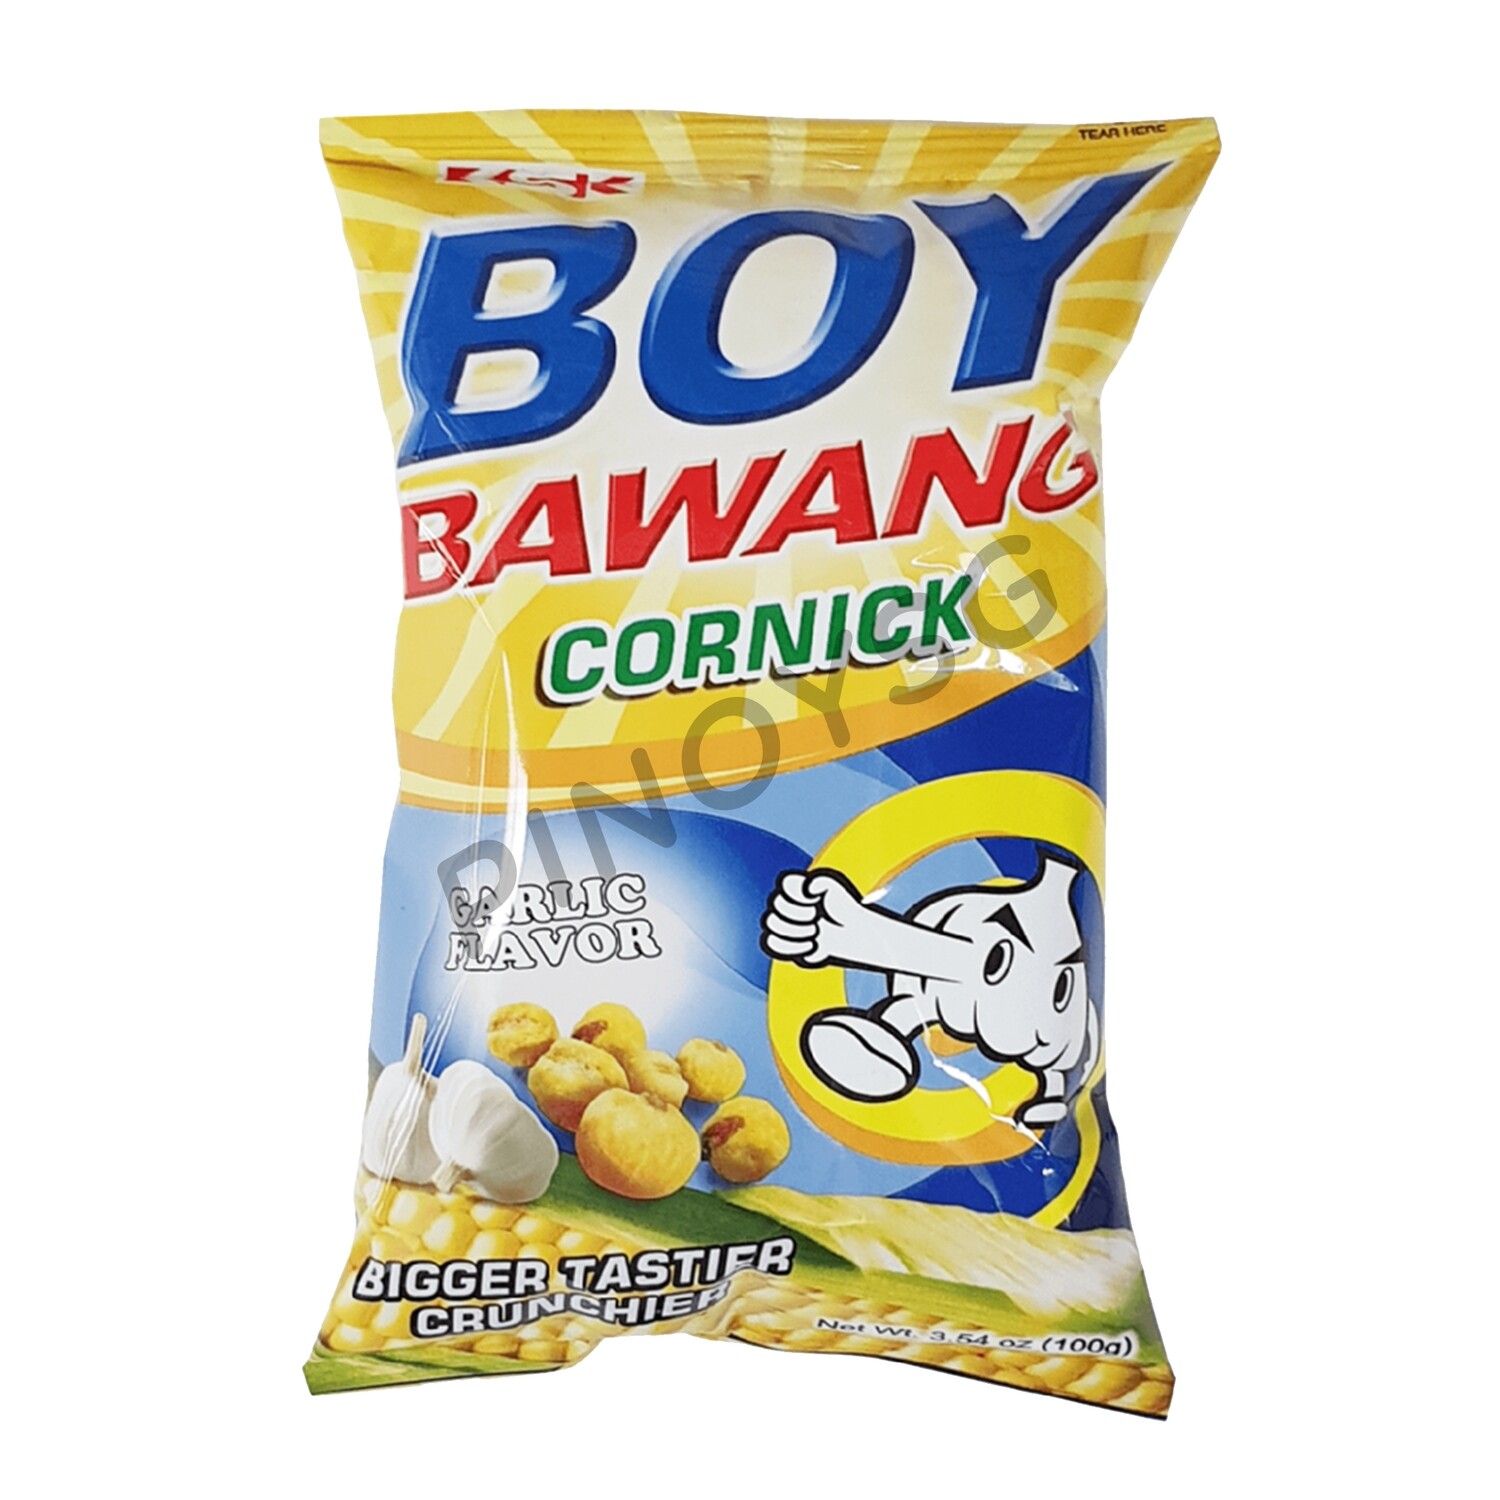 Boy Bawang Cornick Garlic Flavor 90g